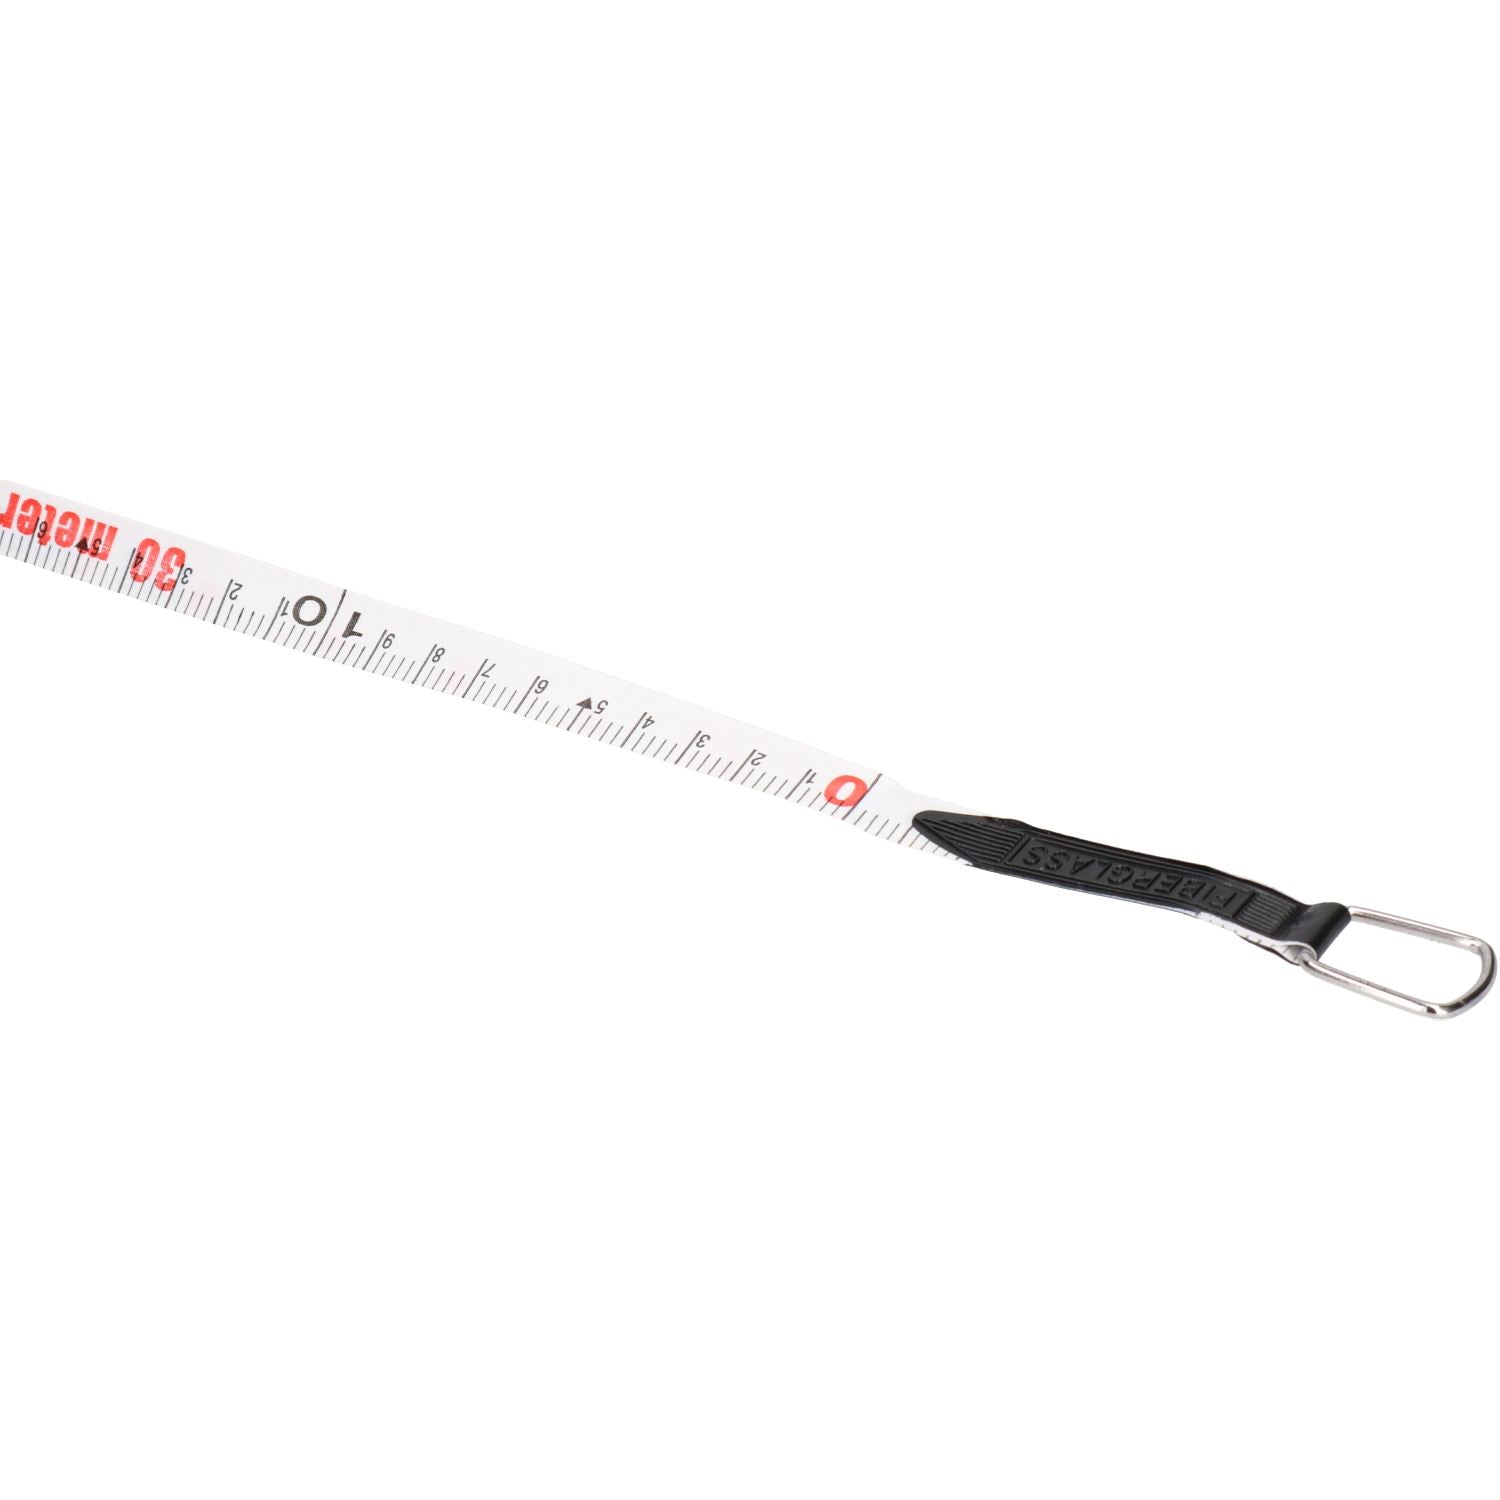 30 Metres / 100 Feet Fibreglass Tape Measure Measuring Surveyors Hi Vis